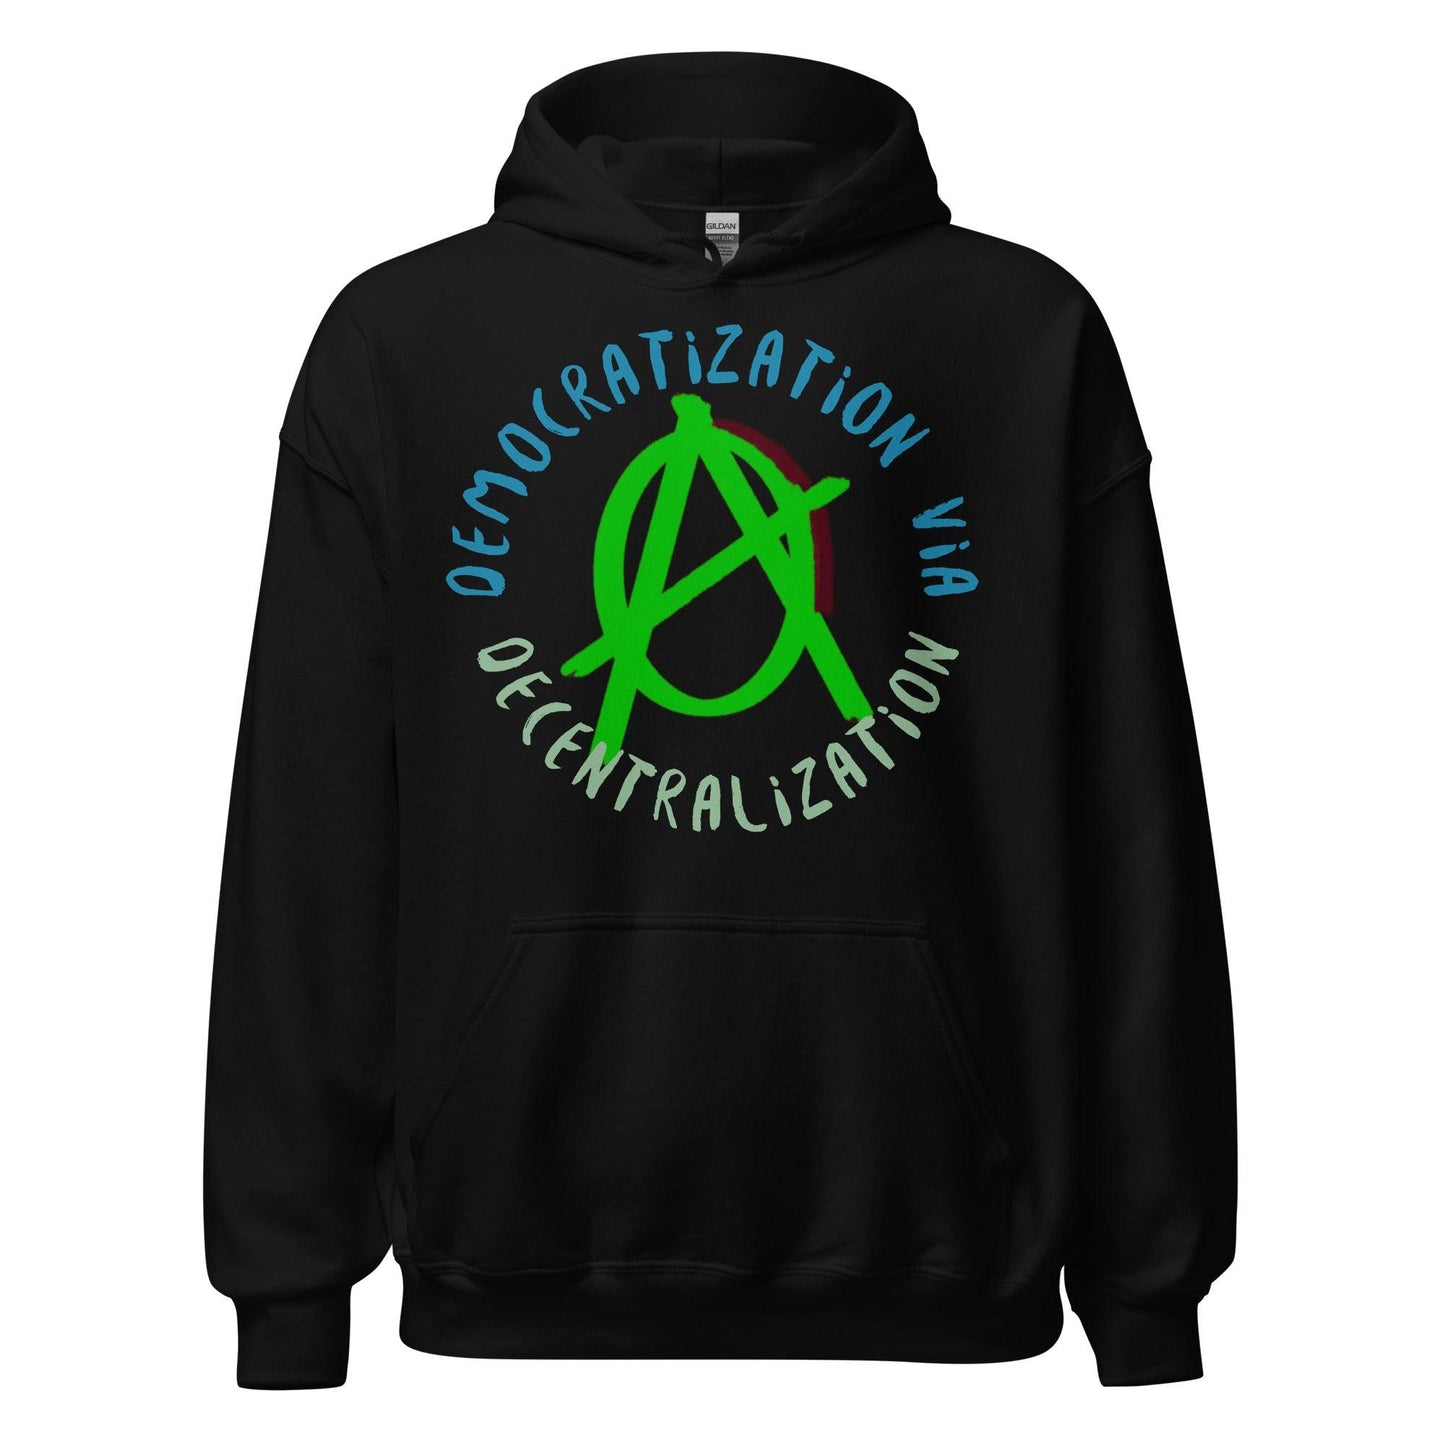 Anarchy Wear Green "Decentralization" Hoodie - AnarchyWear